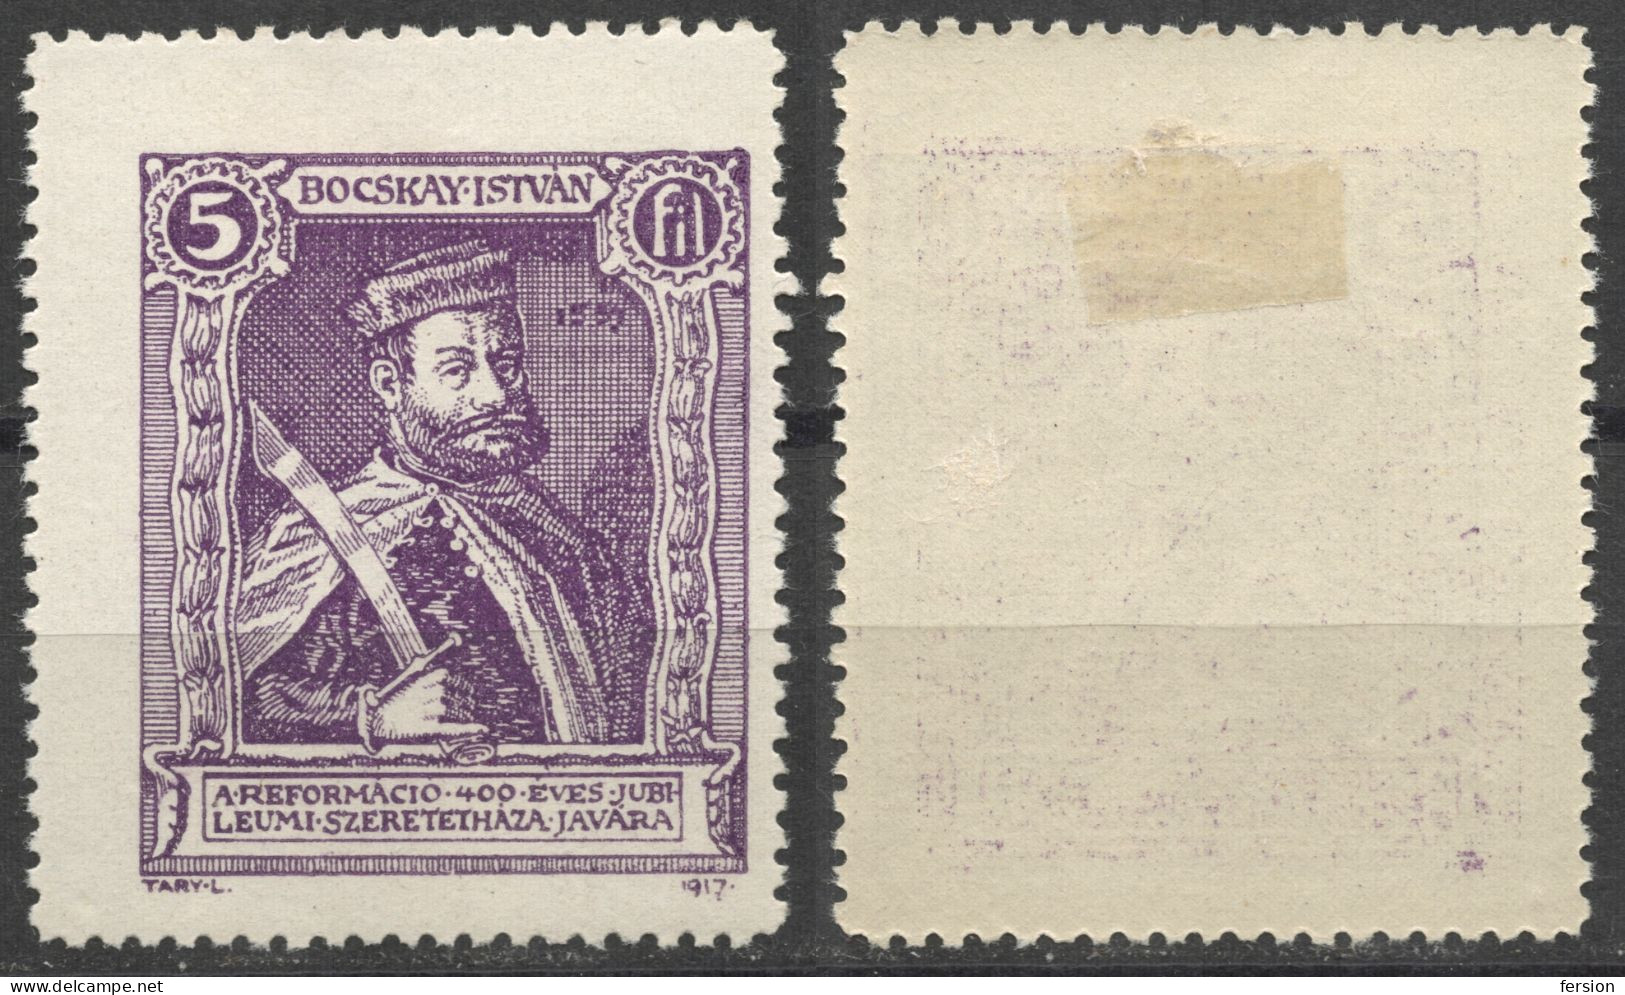 Bocskay Istvan Prince Transylvania ROMANIA Reformed Church Protestant Reformation Label Vignette Cinderella 1917 HUNGARY - Transilvania